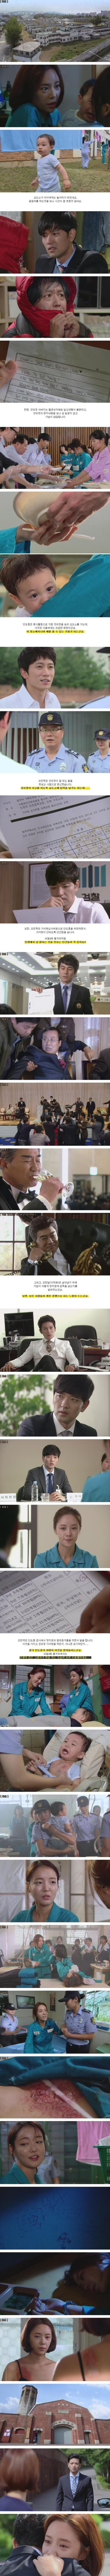 episode 4 captures for the Korean drama 'Secrets'